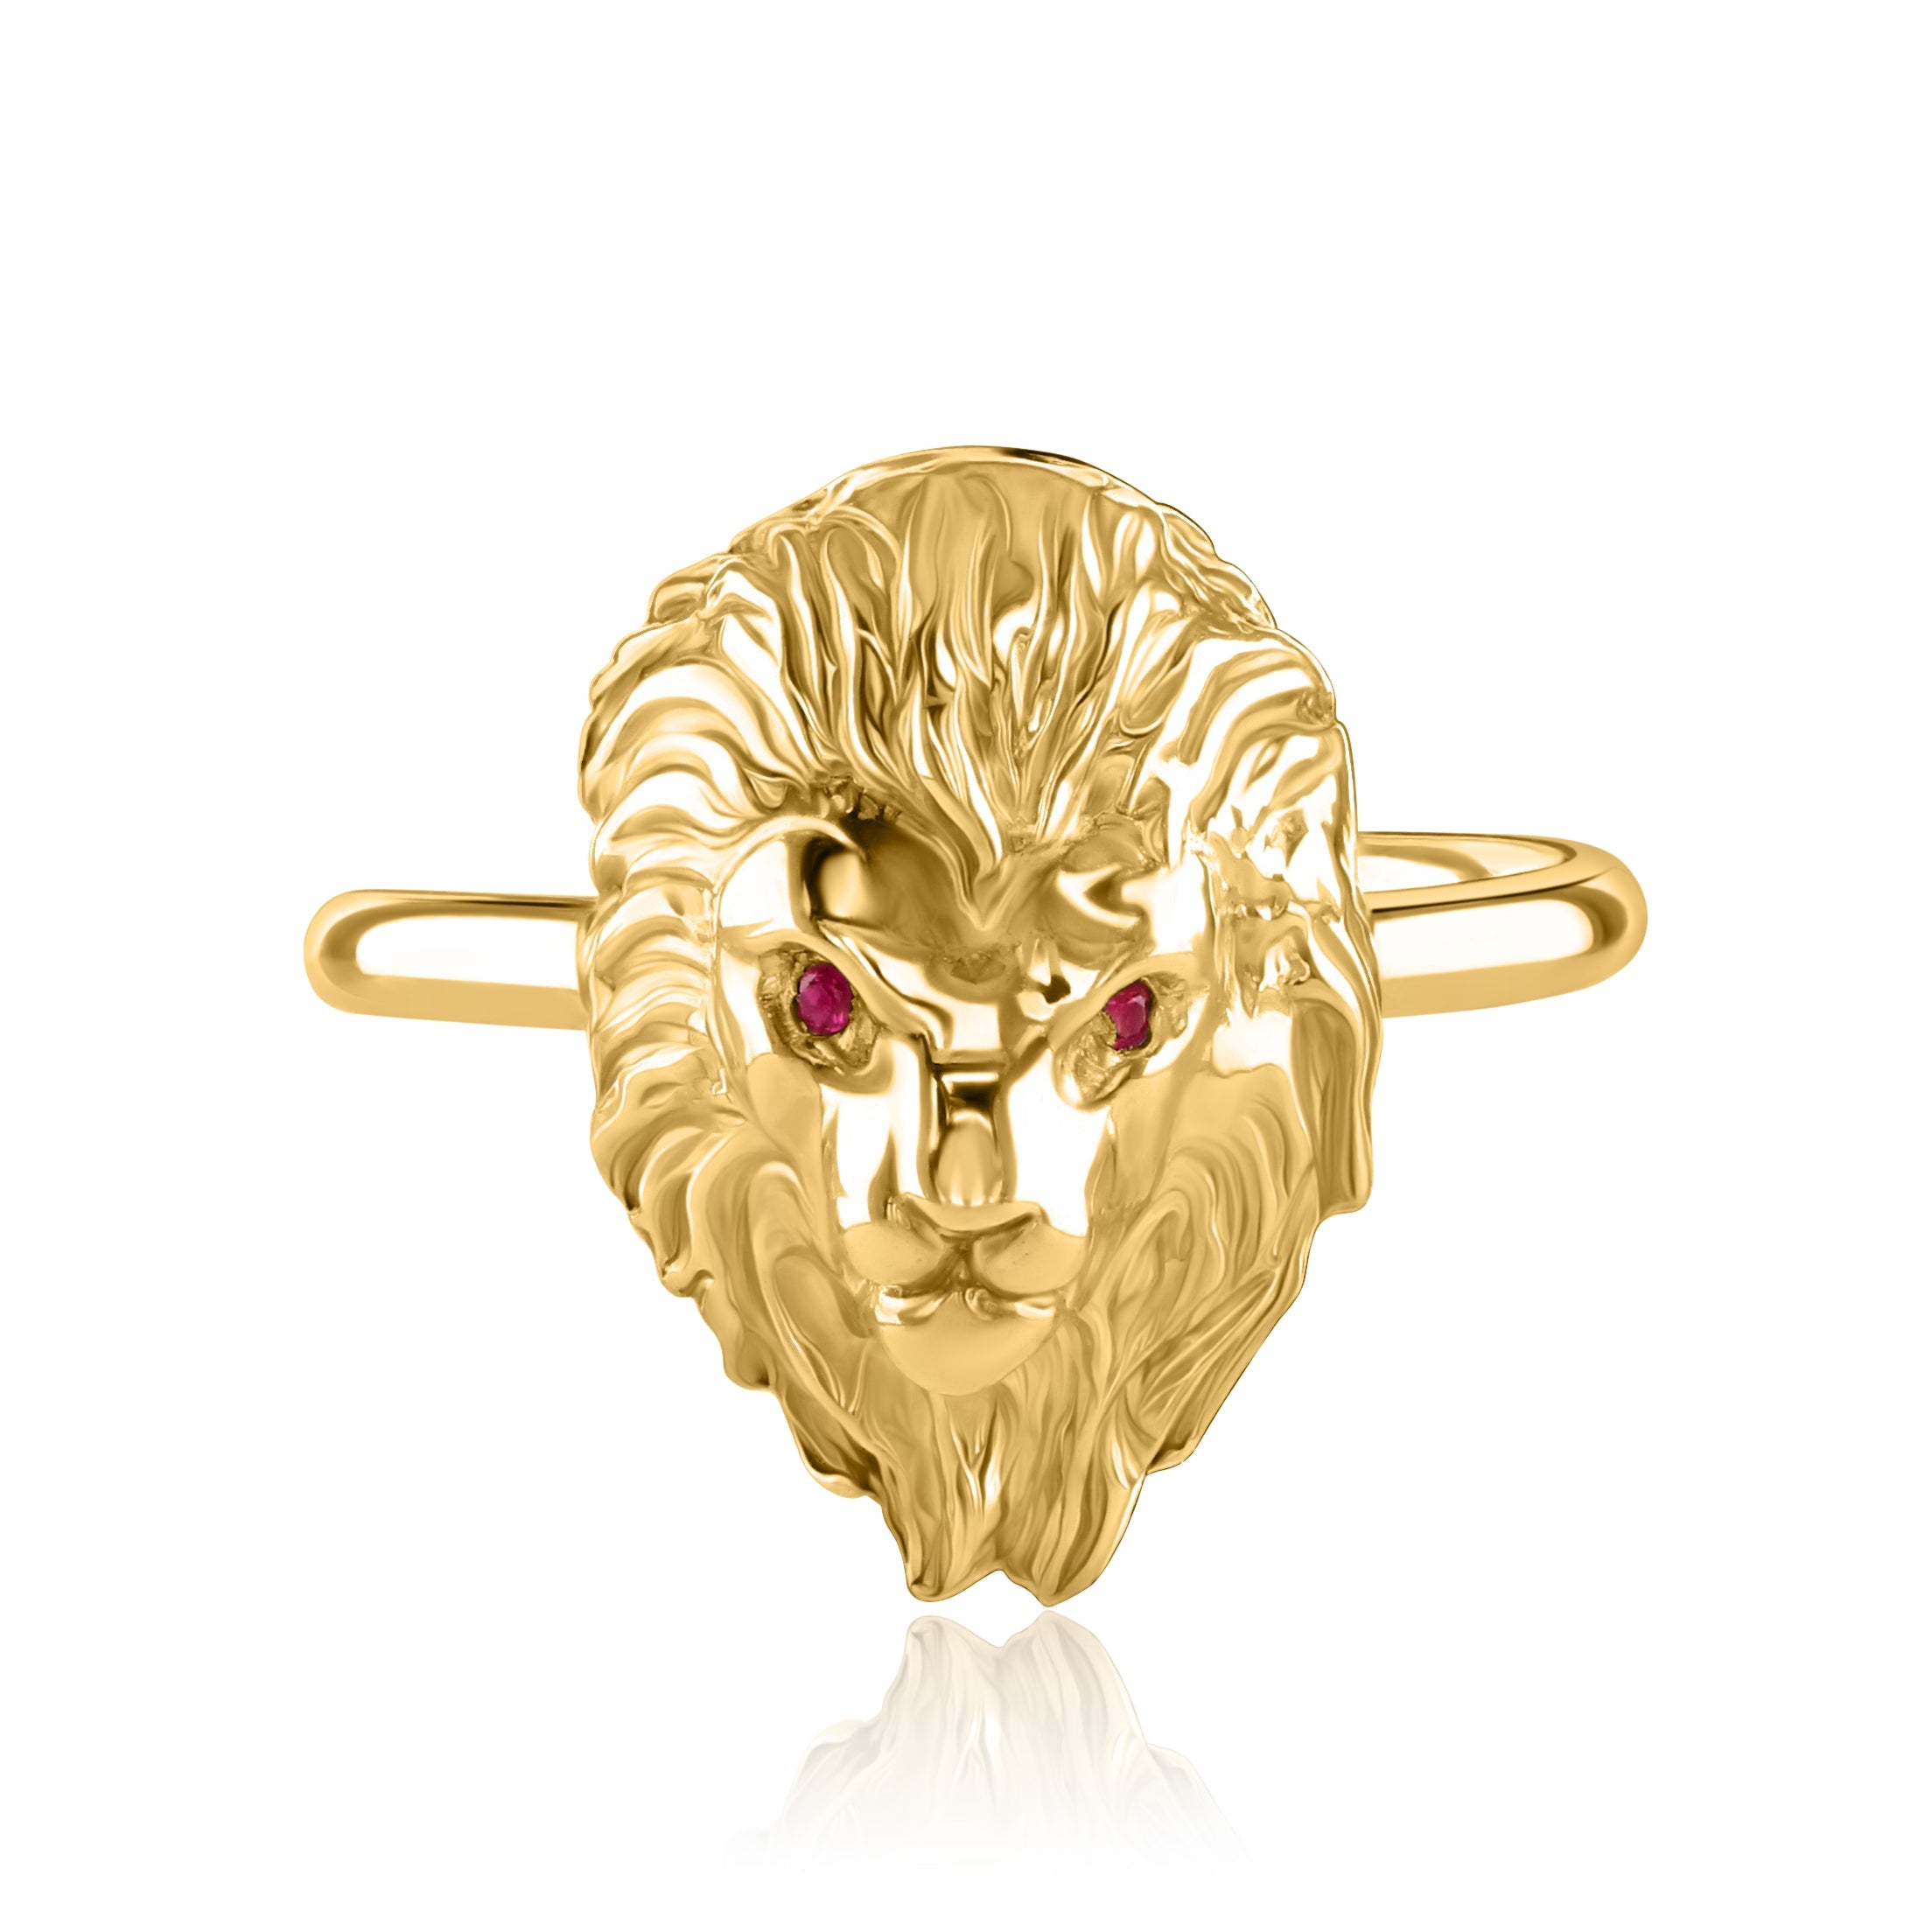 18ct gold Lion ring